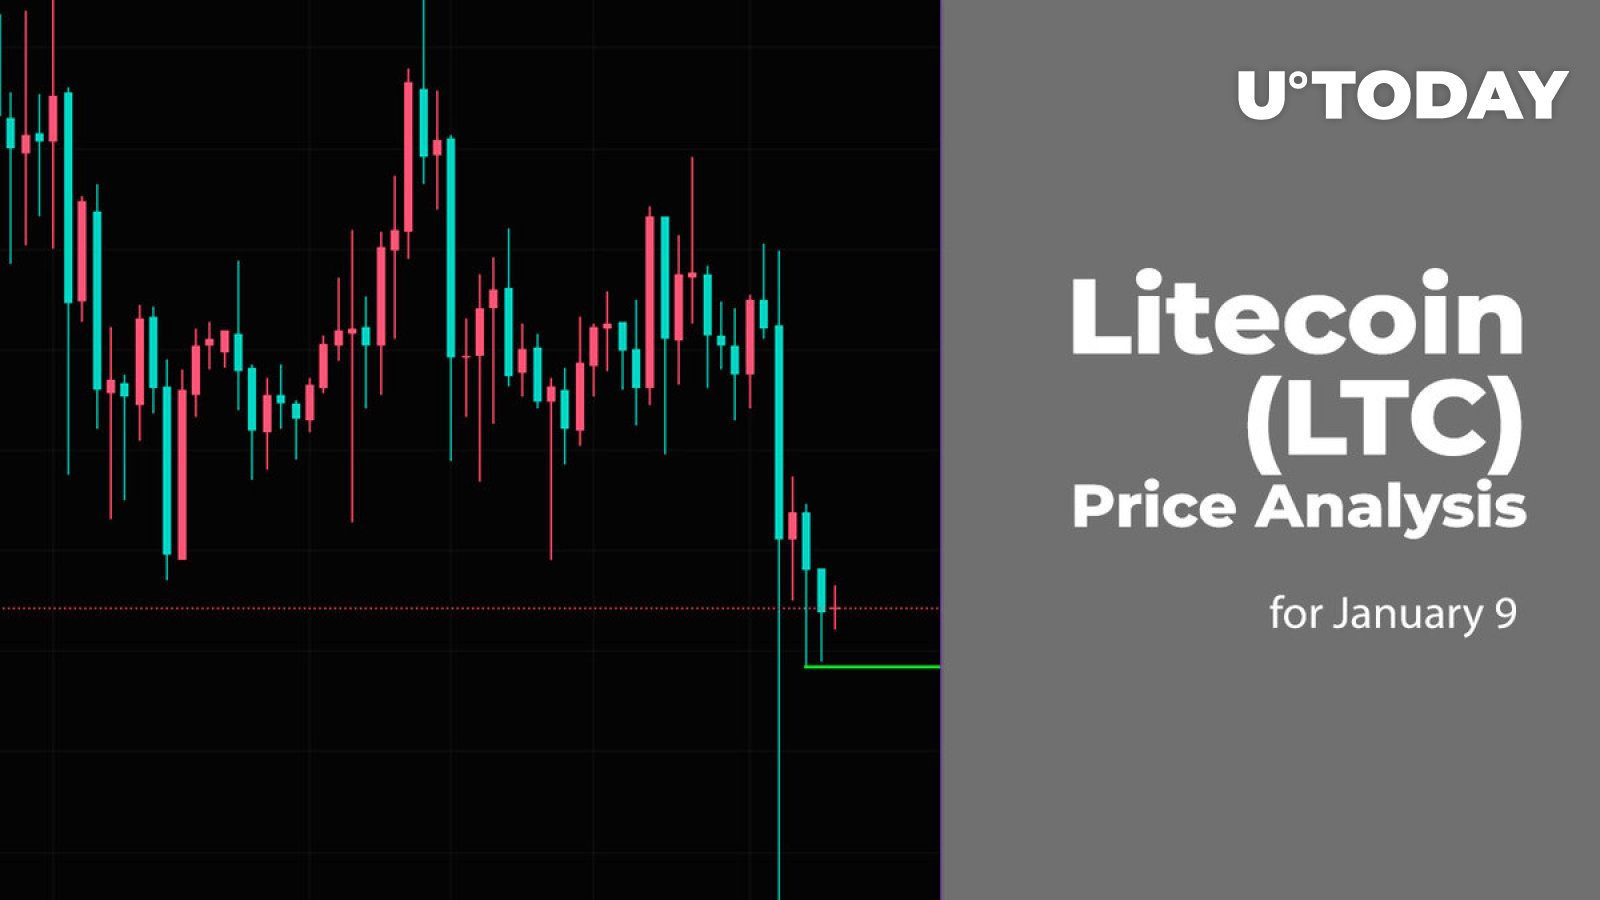 Litecoin (LTC) Price Analysis for January 9